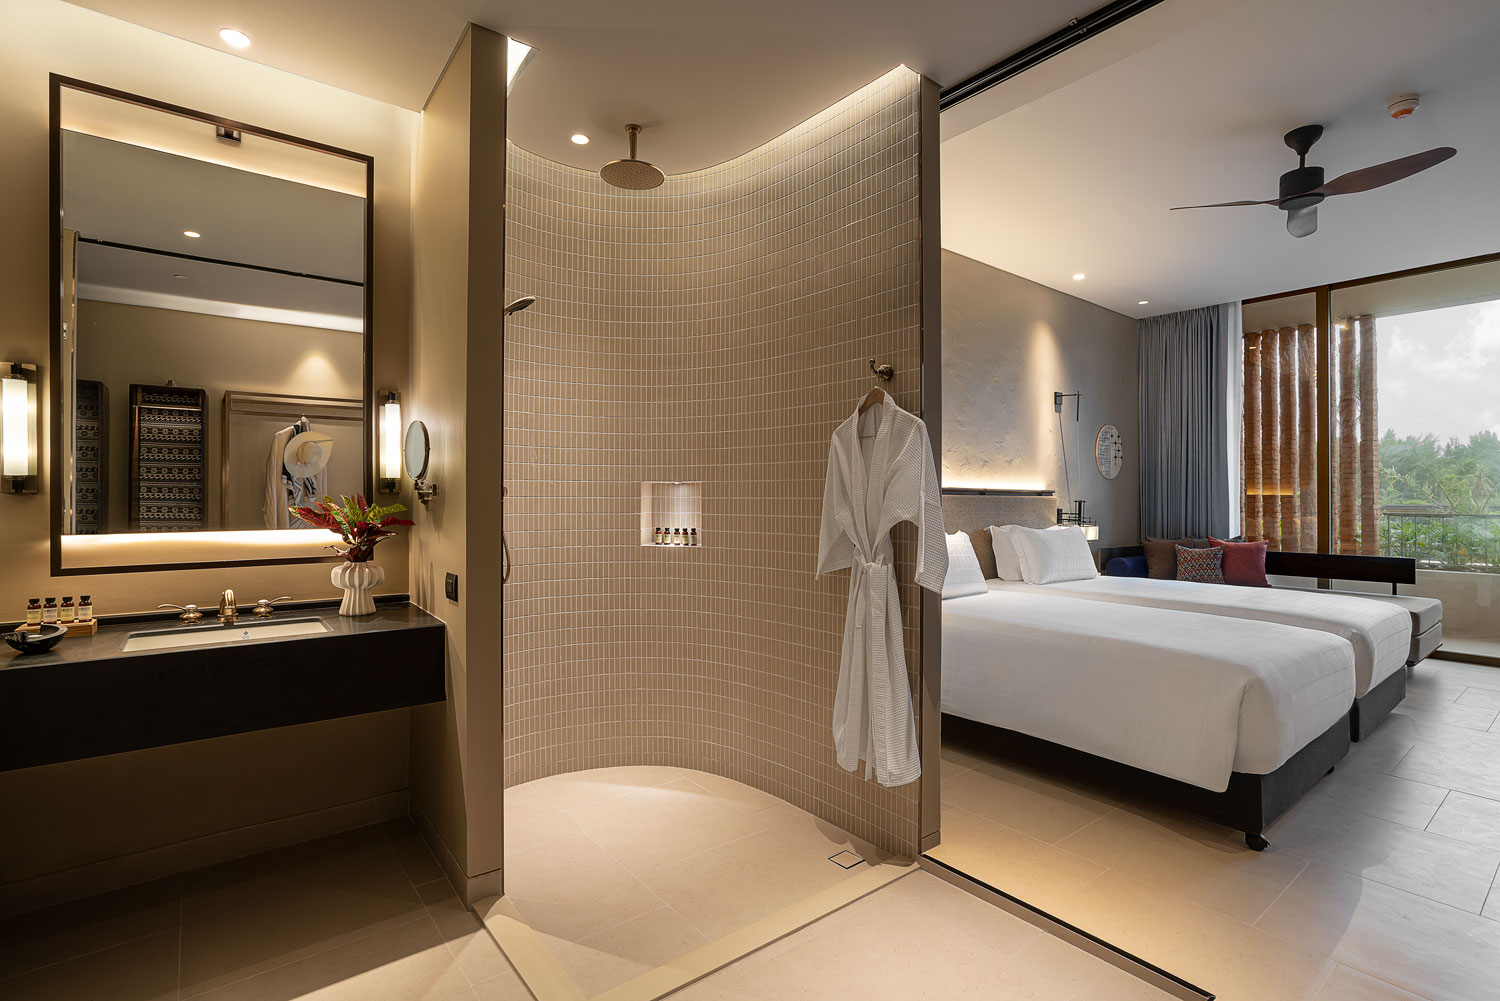 [e-voucher] Pullman Khao Lak Resort - 2D1N Deluxe Room with Breakfast ที่พัก 2 วัน 1 คืนห้องดีลักซ์รวมอาหารเช้าราคาพิเศษ 2,532 บาทเท่านั้น!!